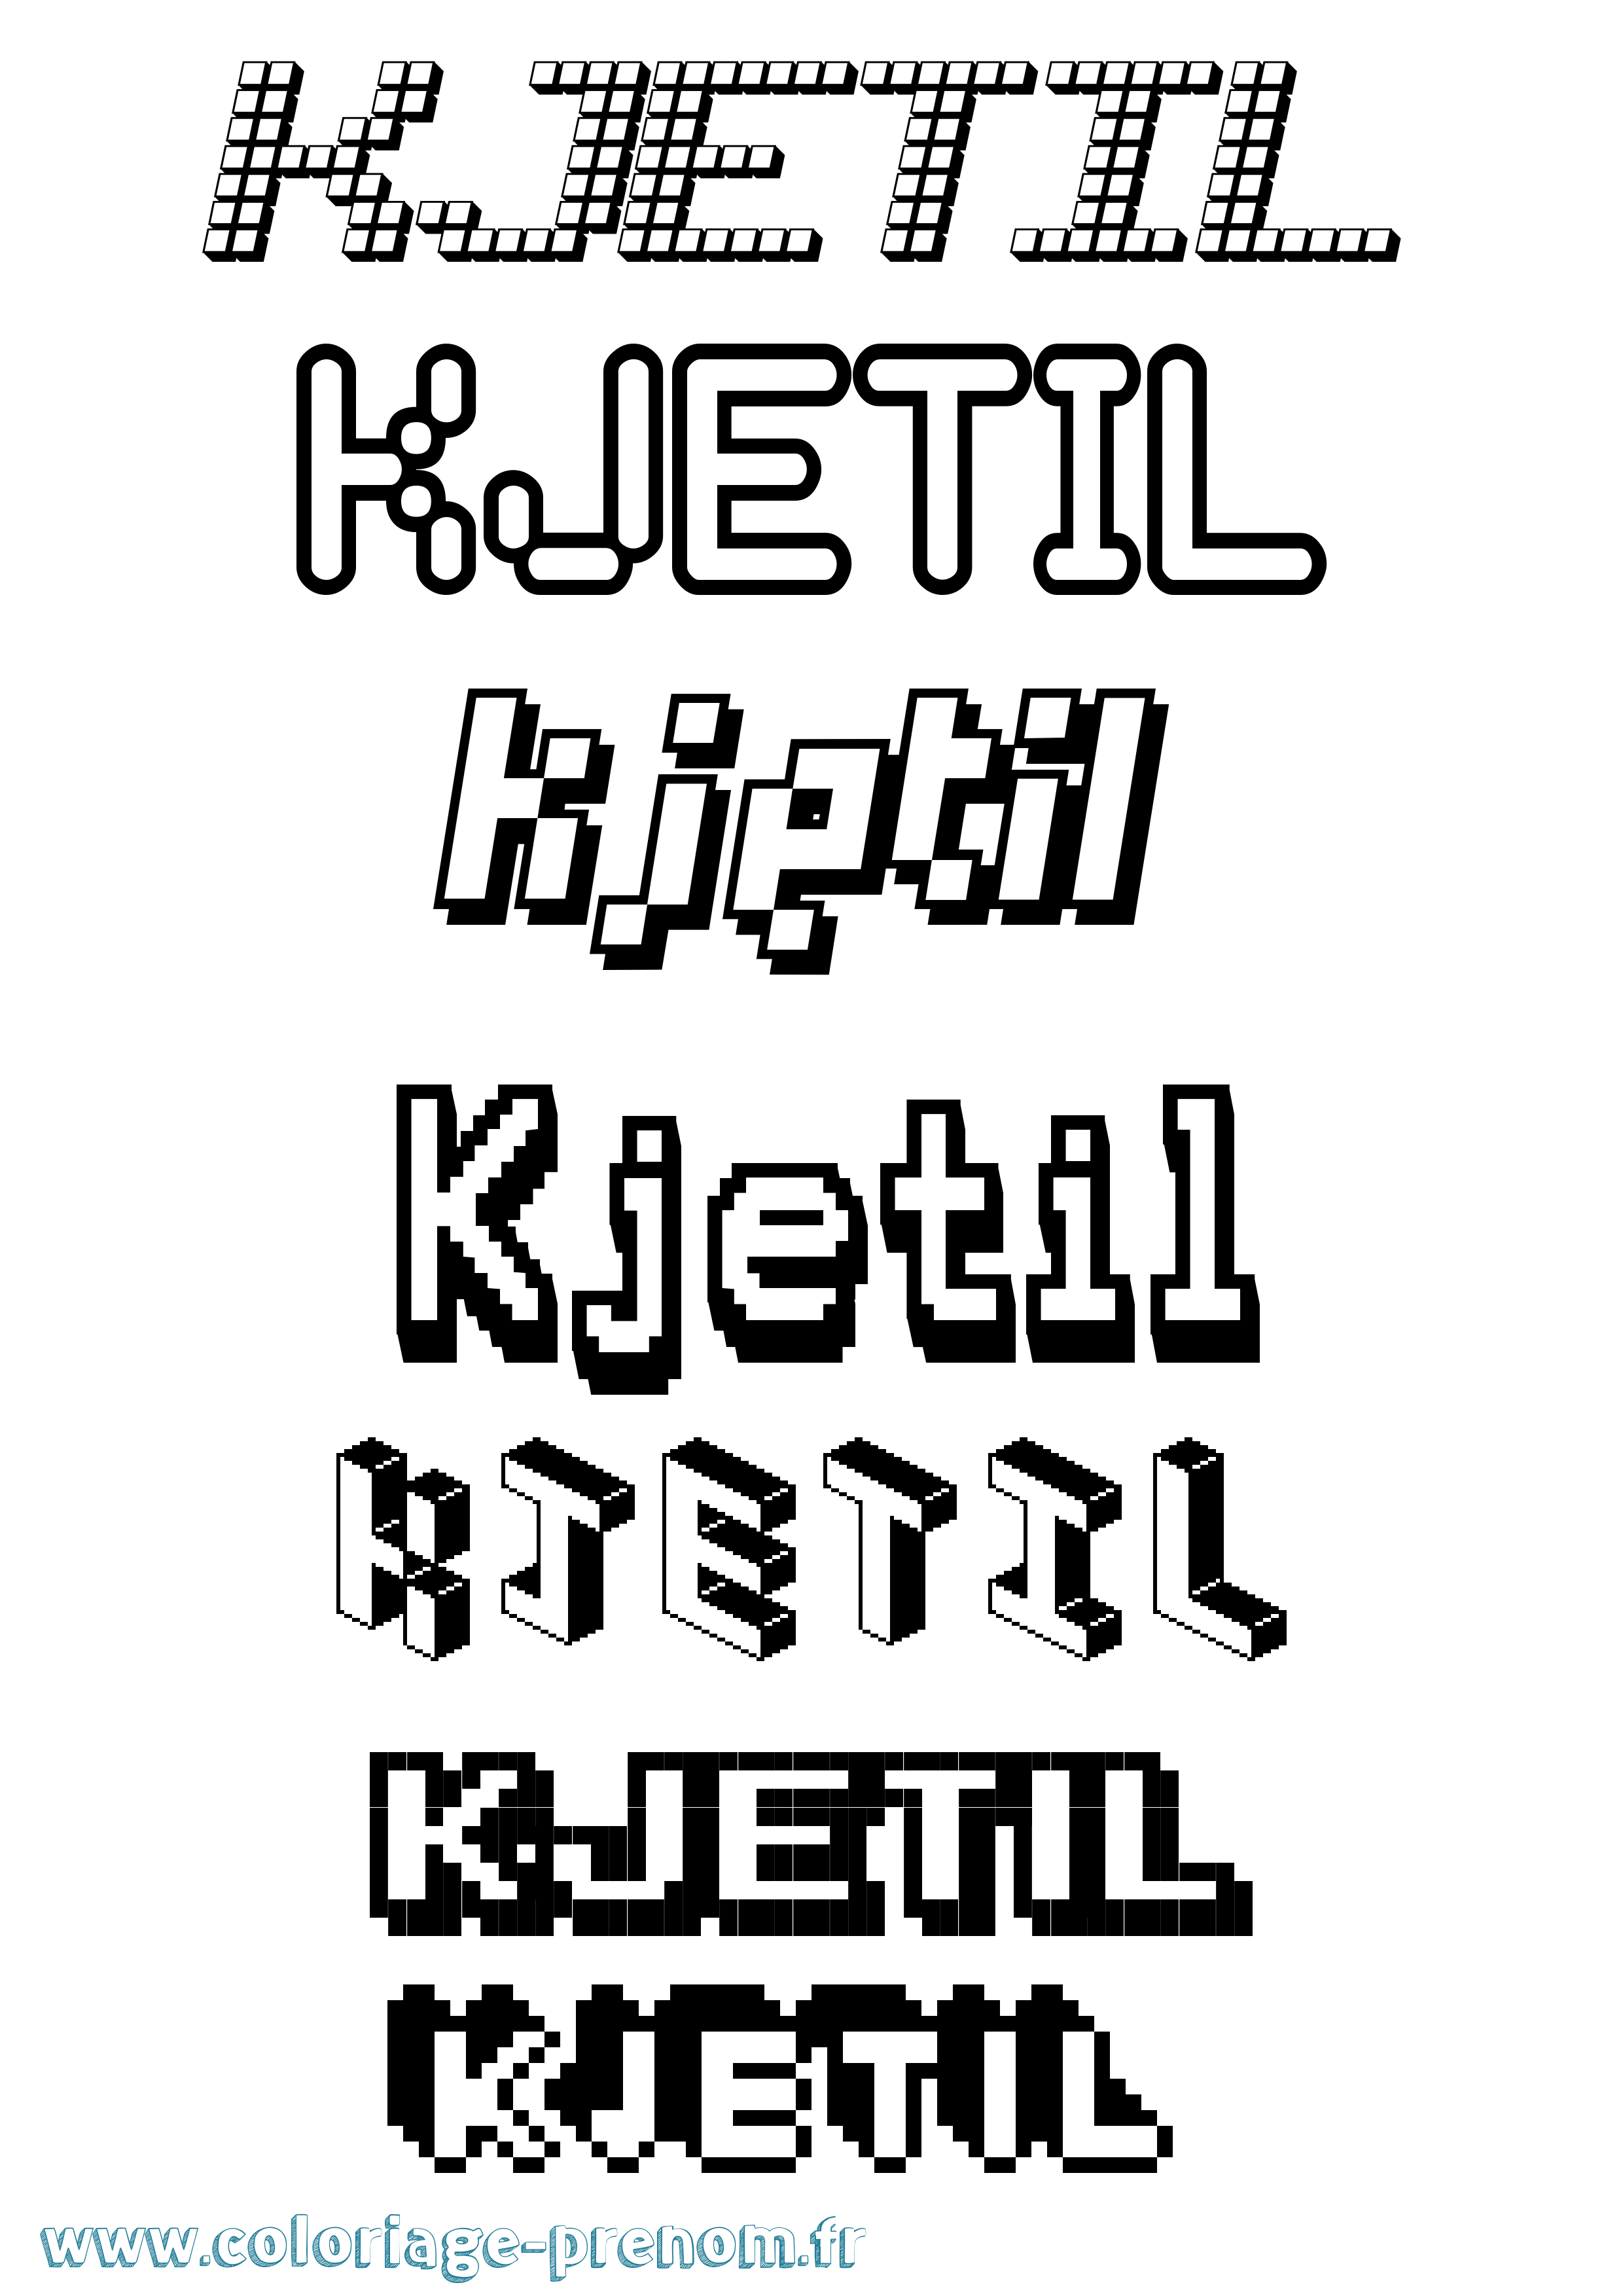 Coloriage prénom Kjetil Pixel